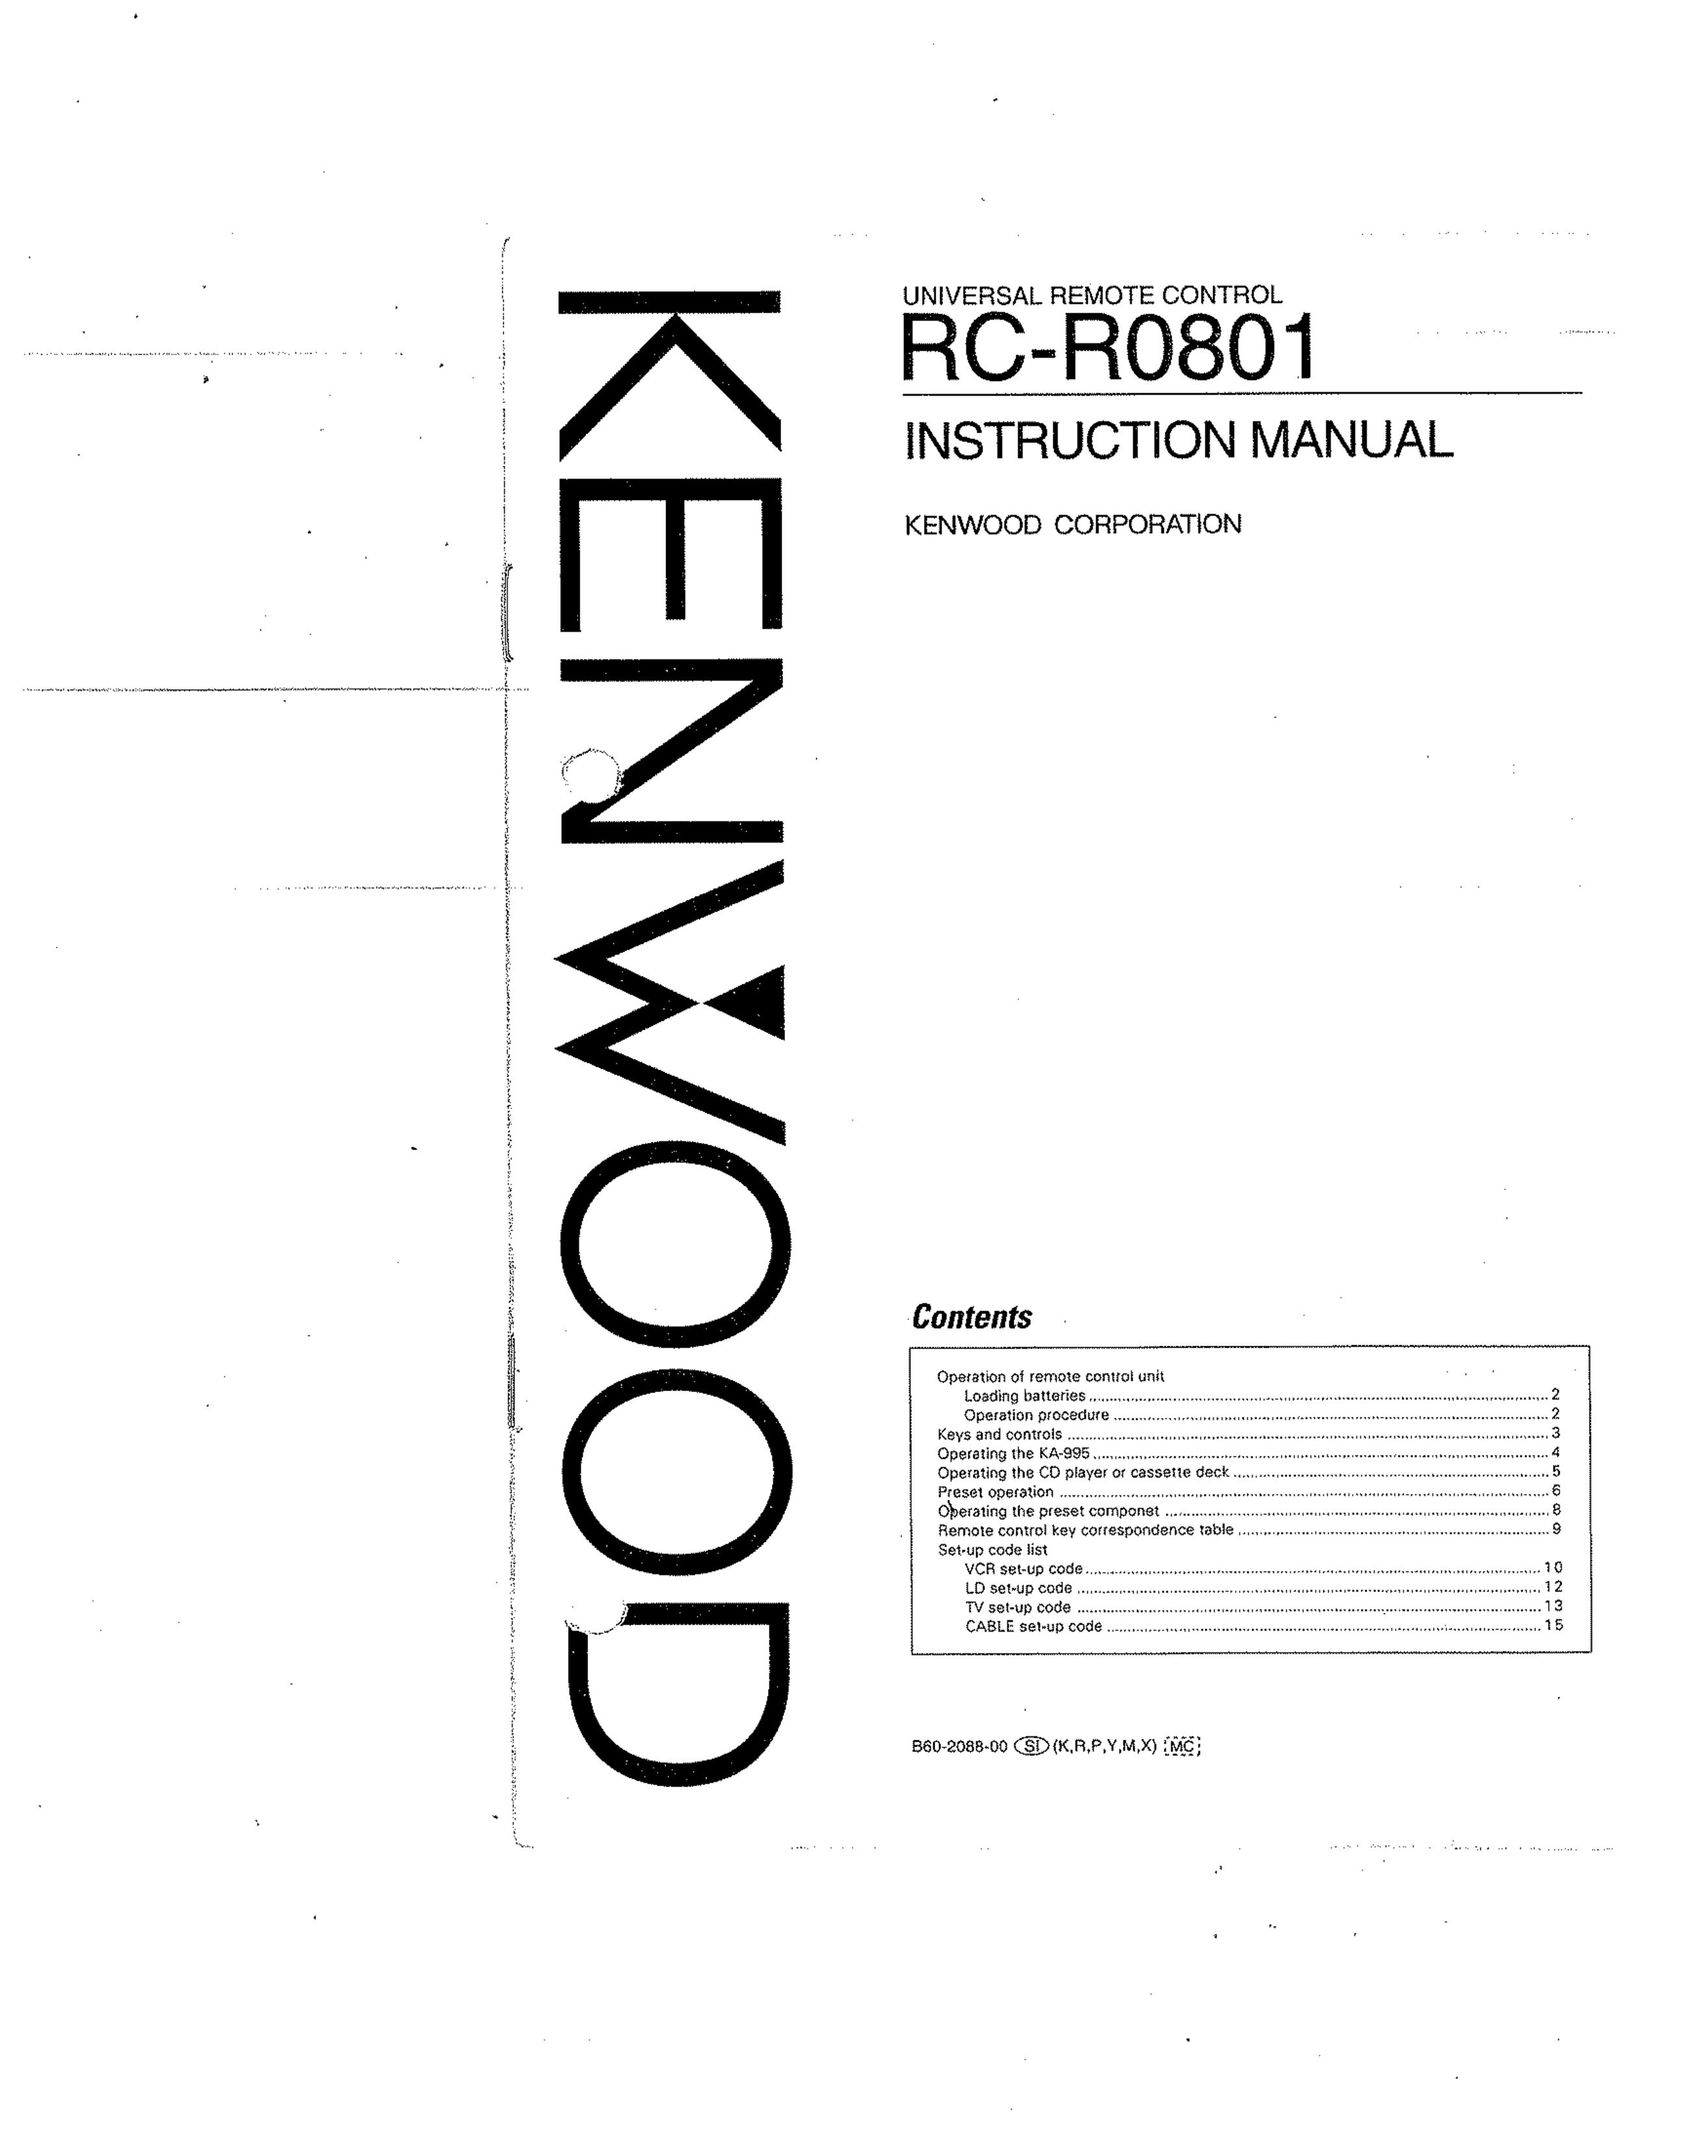 Kenwood RC-R0801 Universal Remote User Manual